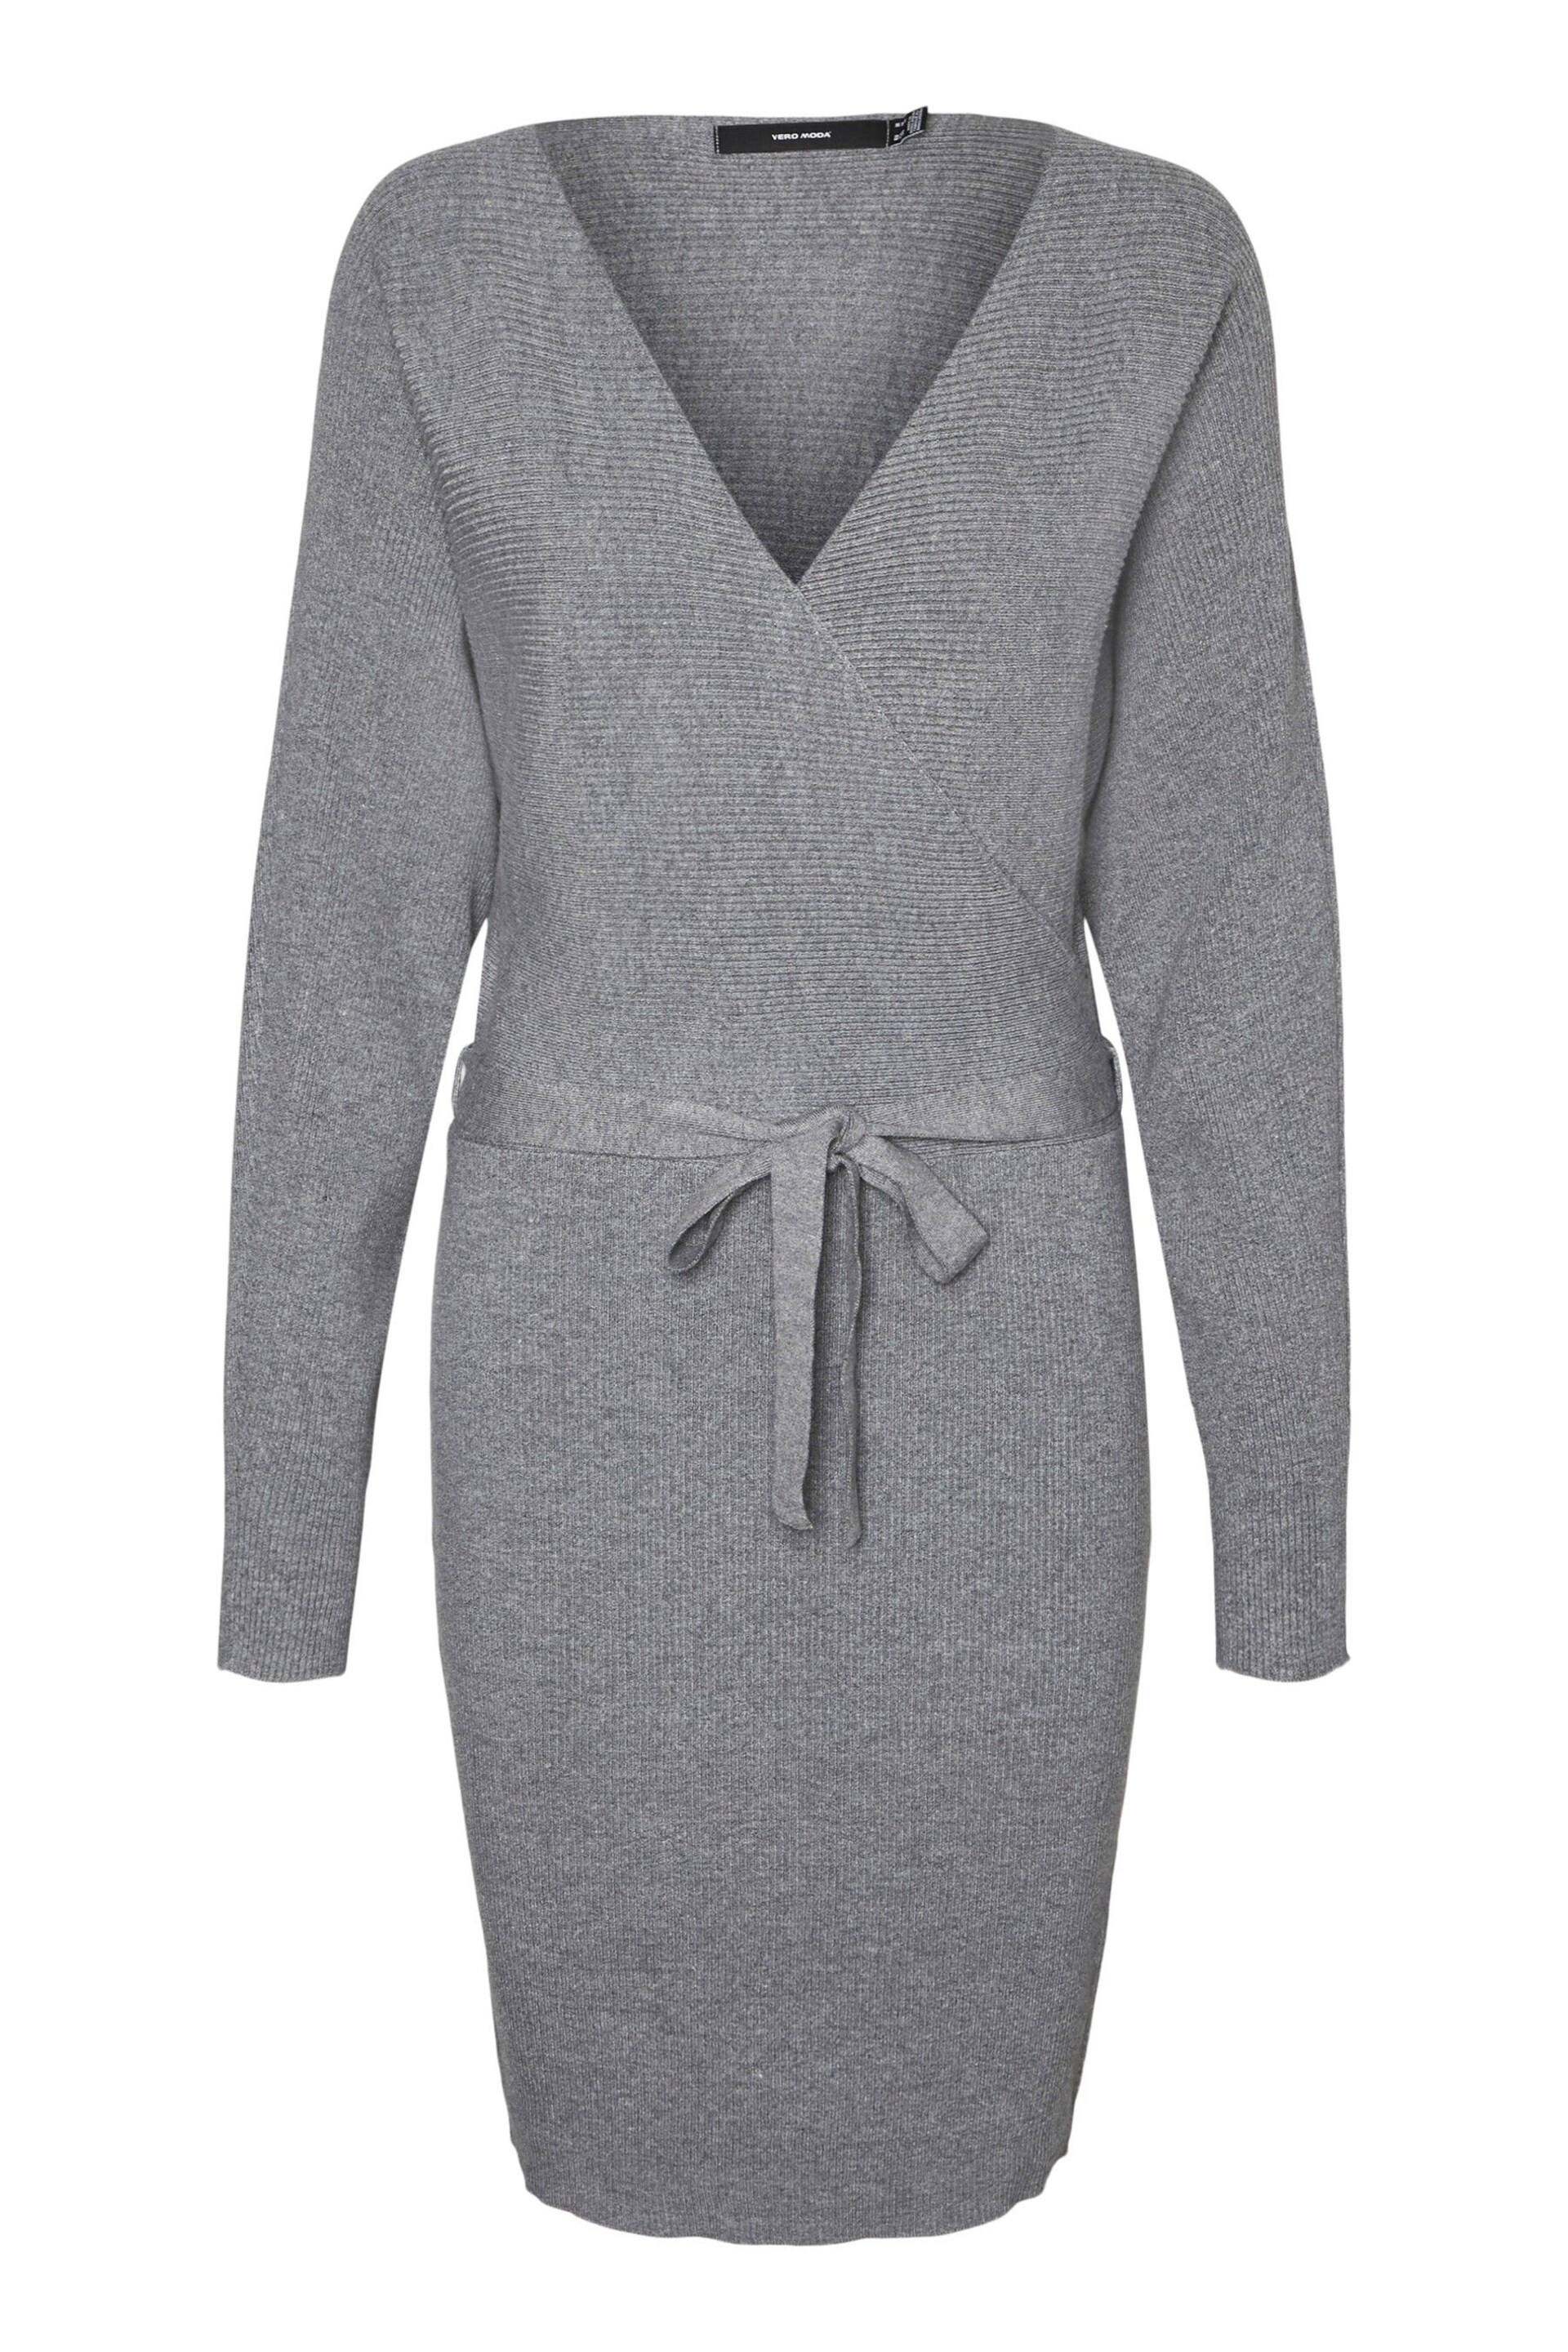 VERO MODA Grey V-Neck Wrap Belted Knitted Dress - Image 5 of 5